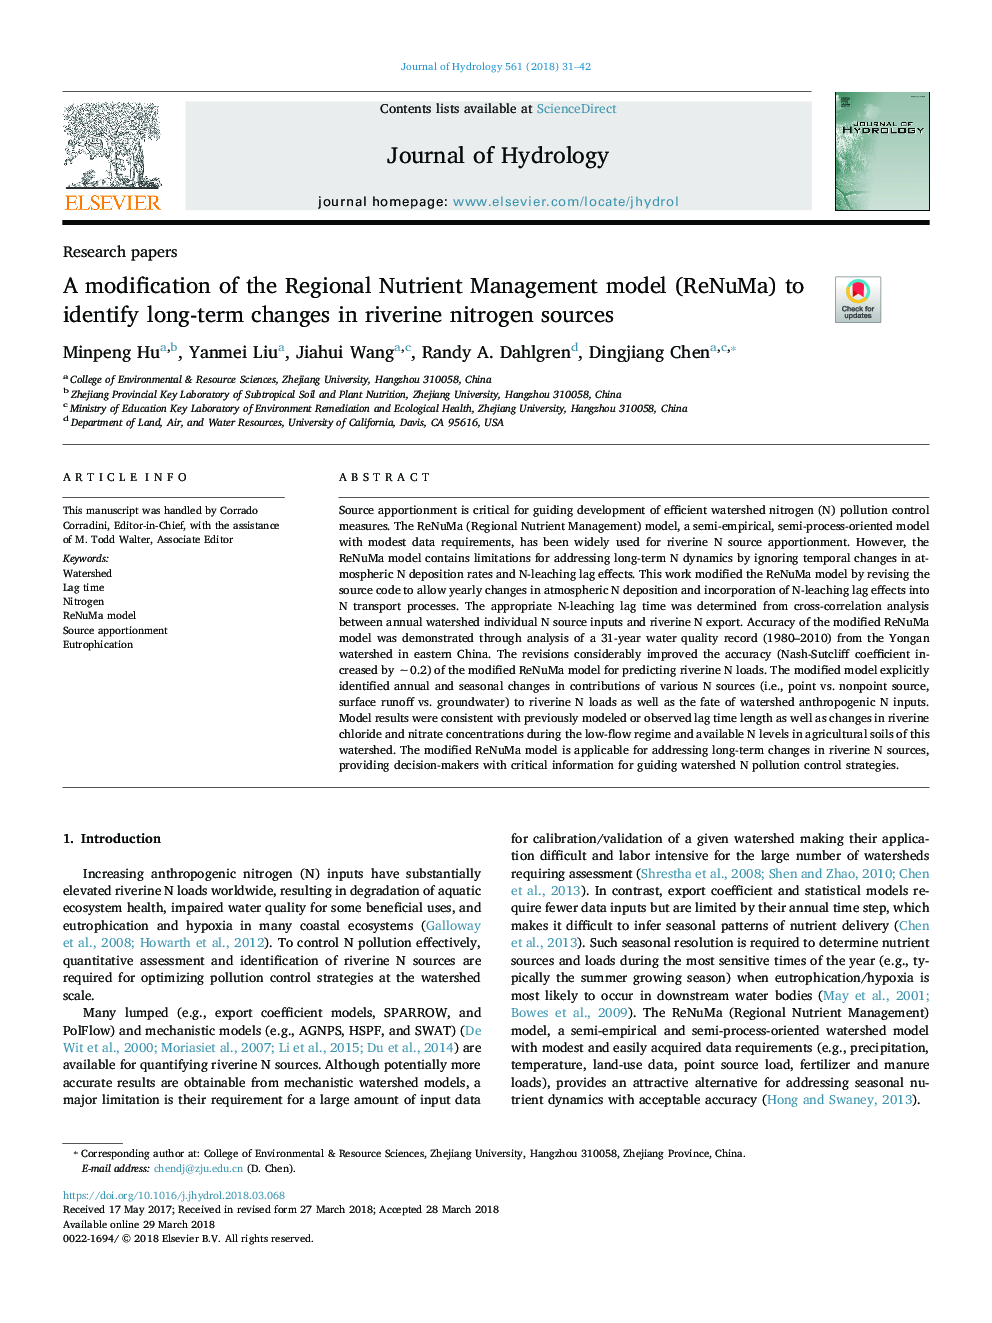 A modification of the Regional Nutrient Management model (ReNuMa) to identify long-term changes in riverine nitrogen sources